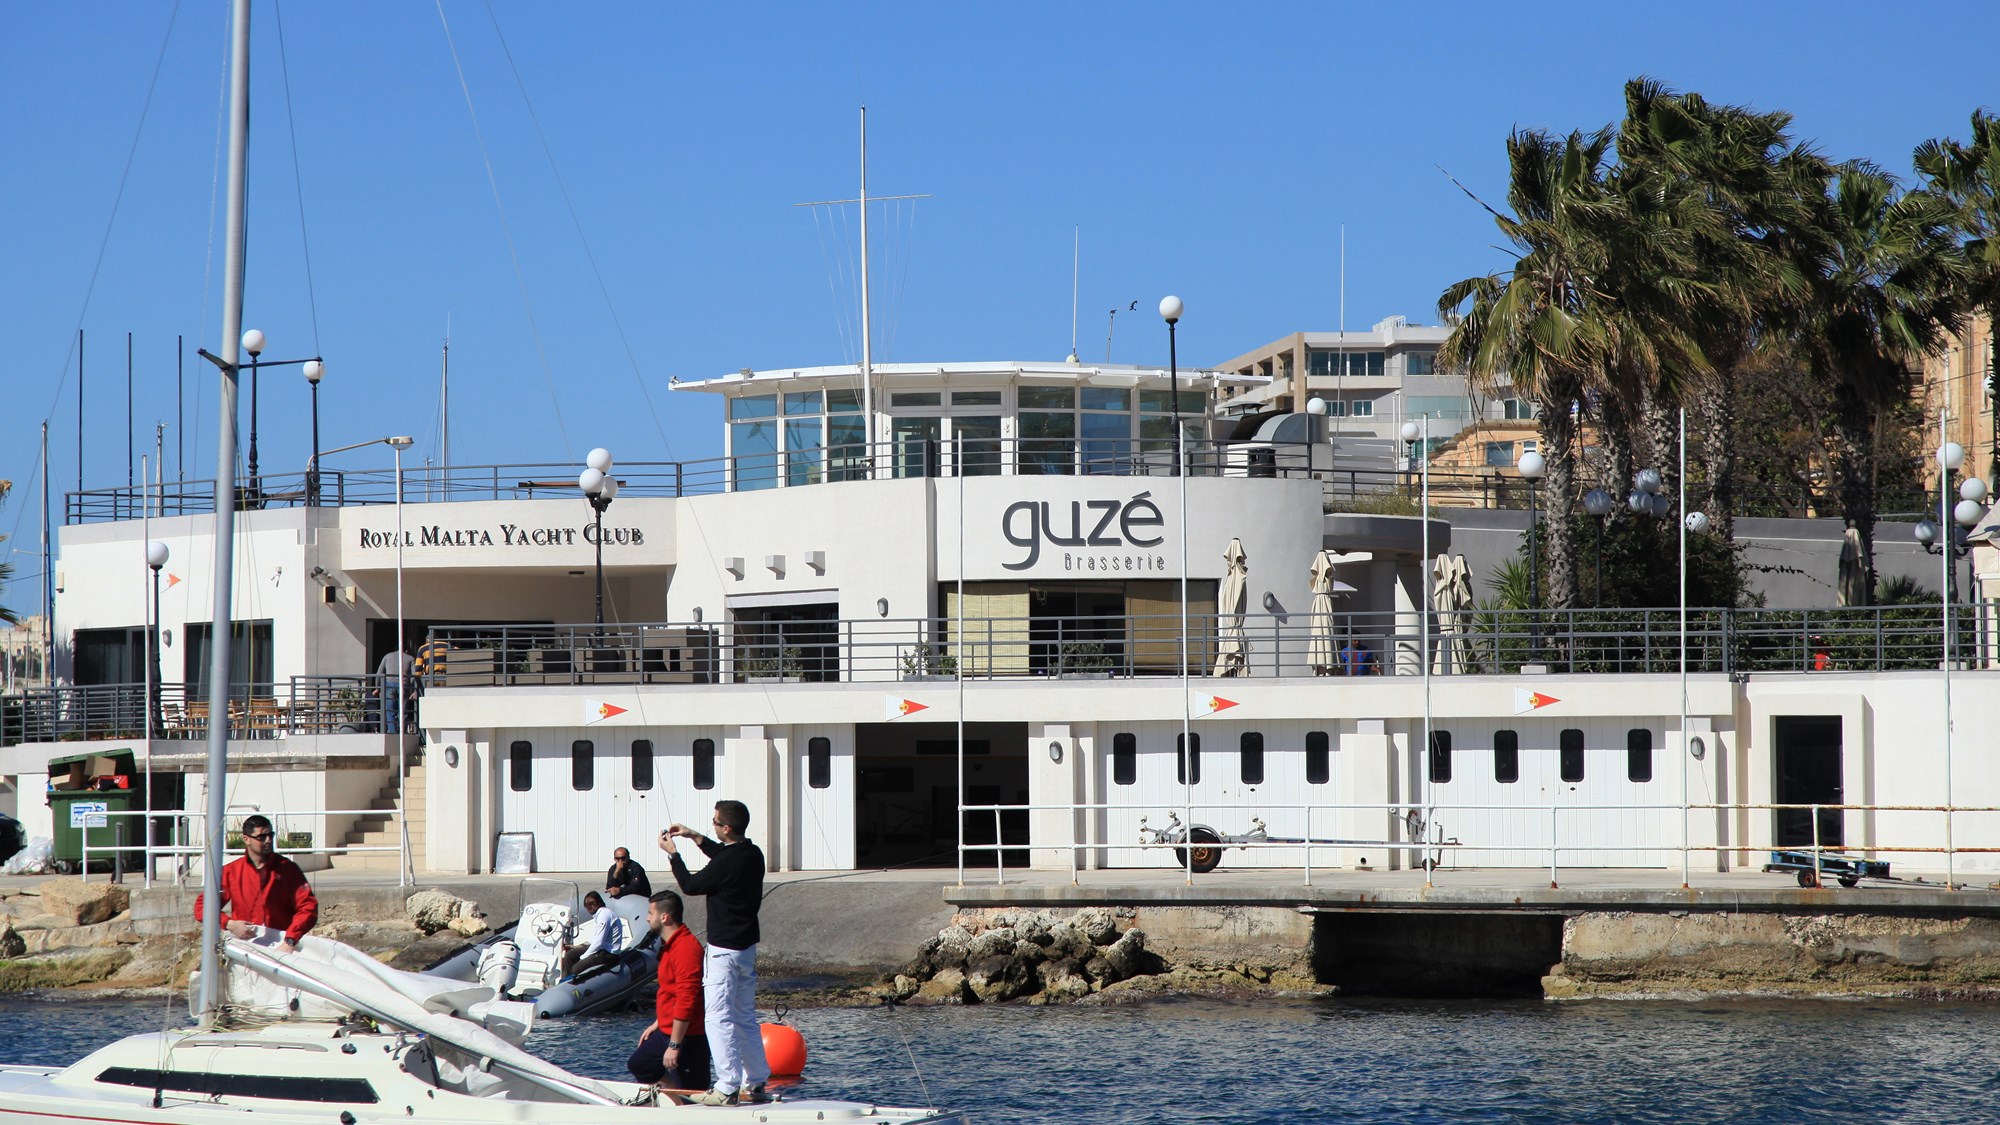 the royal malta yacht club